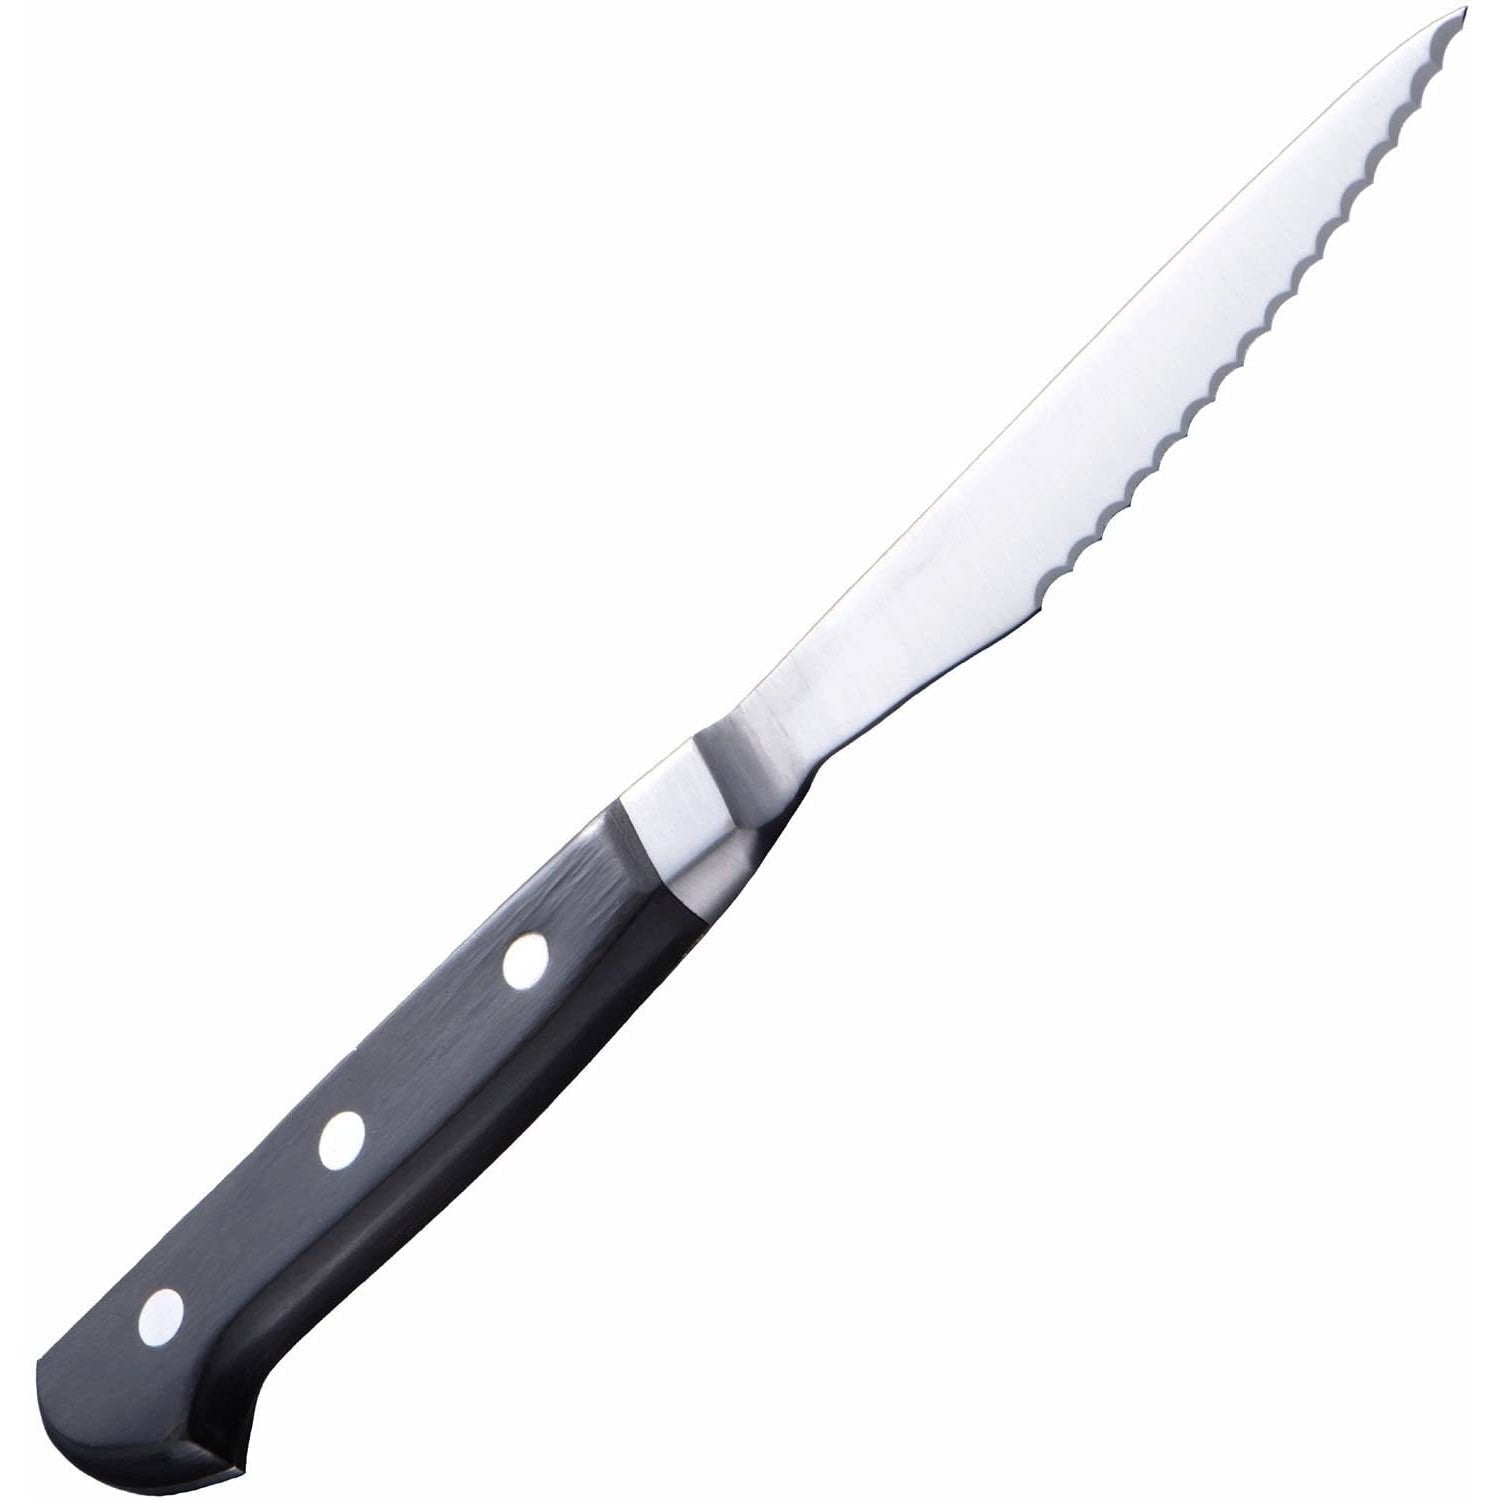 Molybdenum Steel Serrated Steak Knife with Wood Handle 230mm